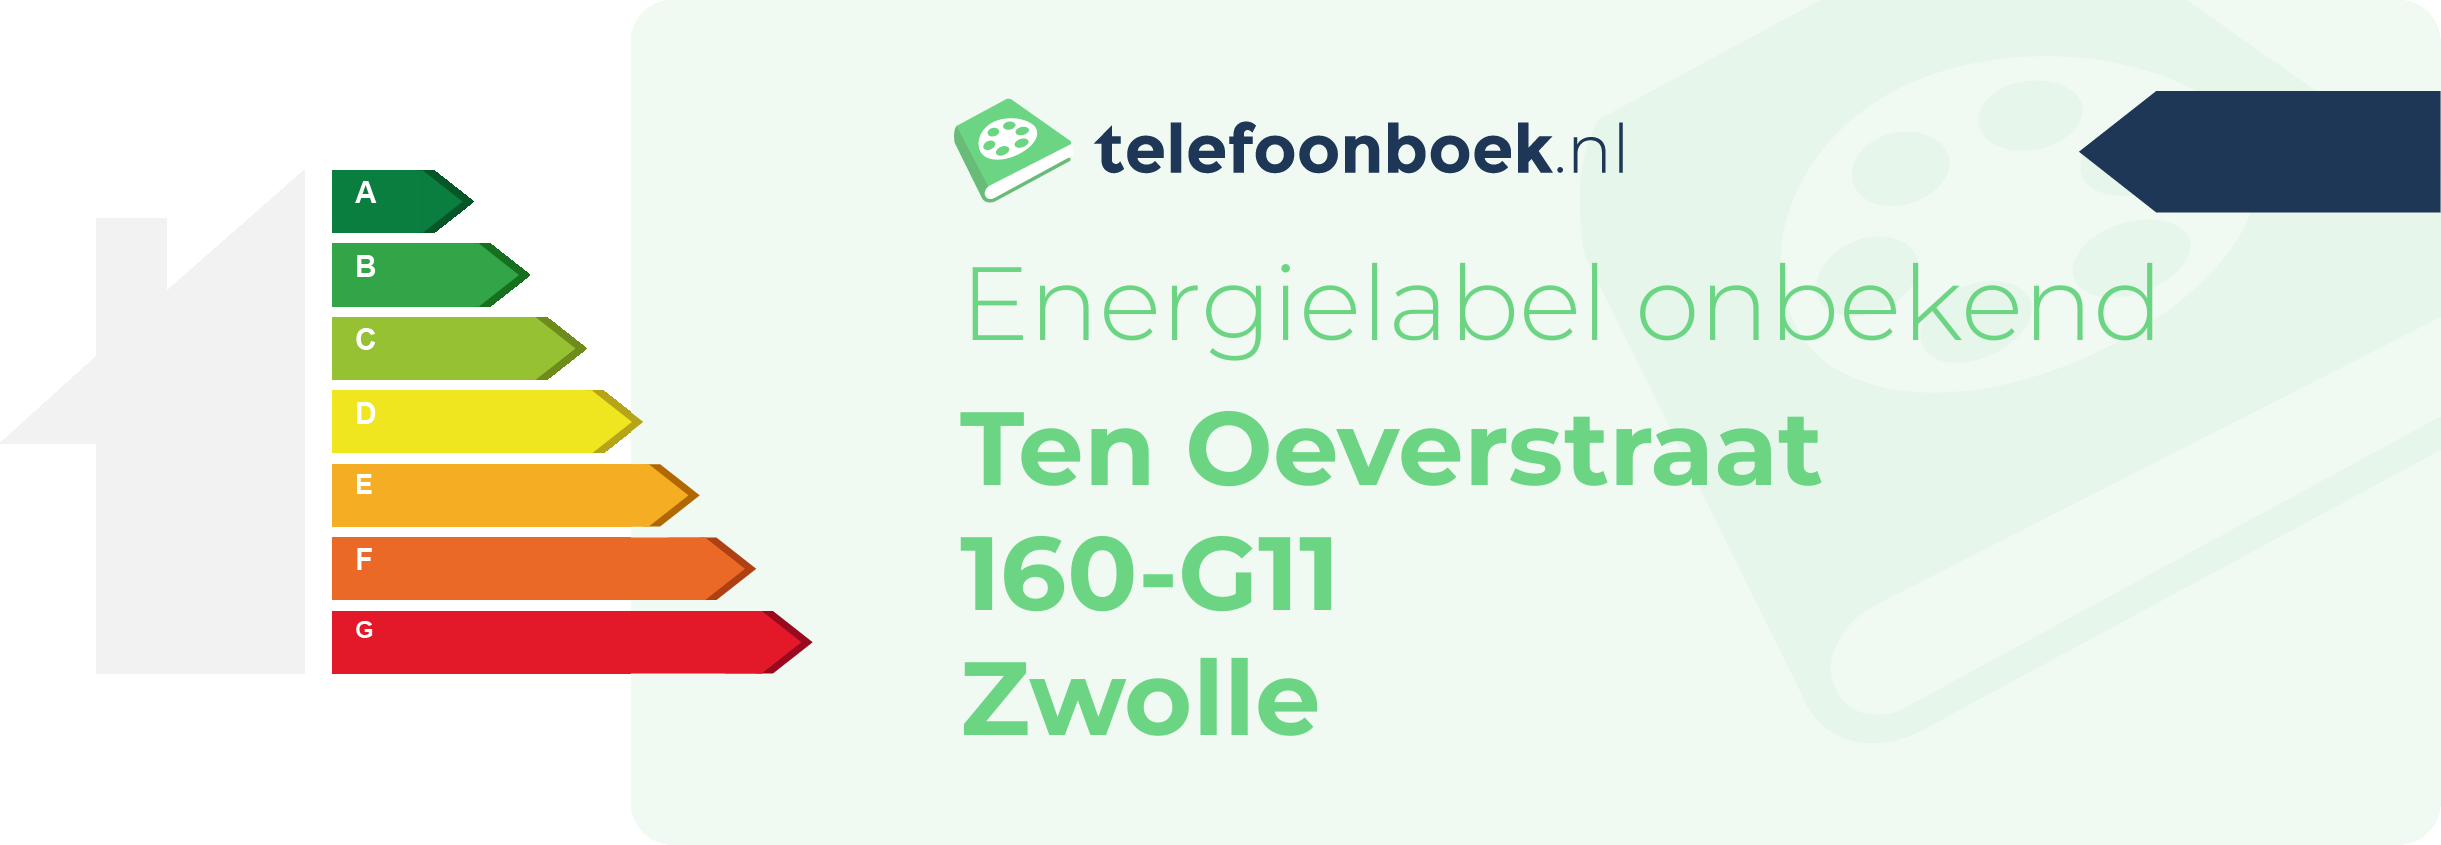 Energielabel Ten Oeverstraat 160-G11 Zwolle